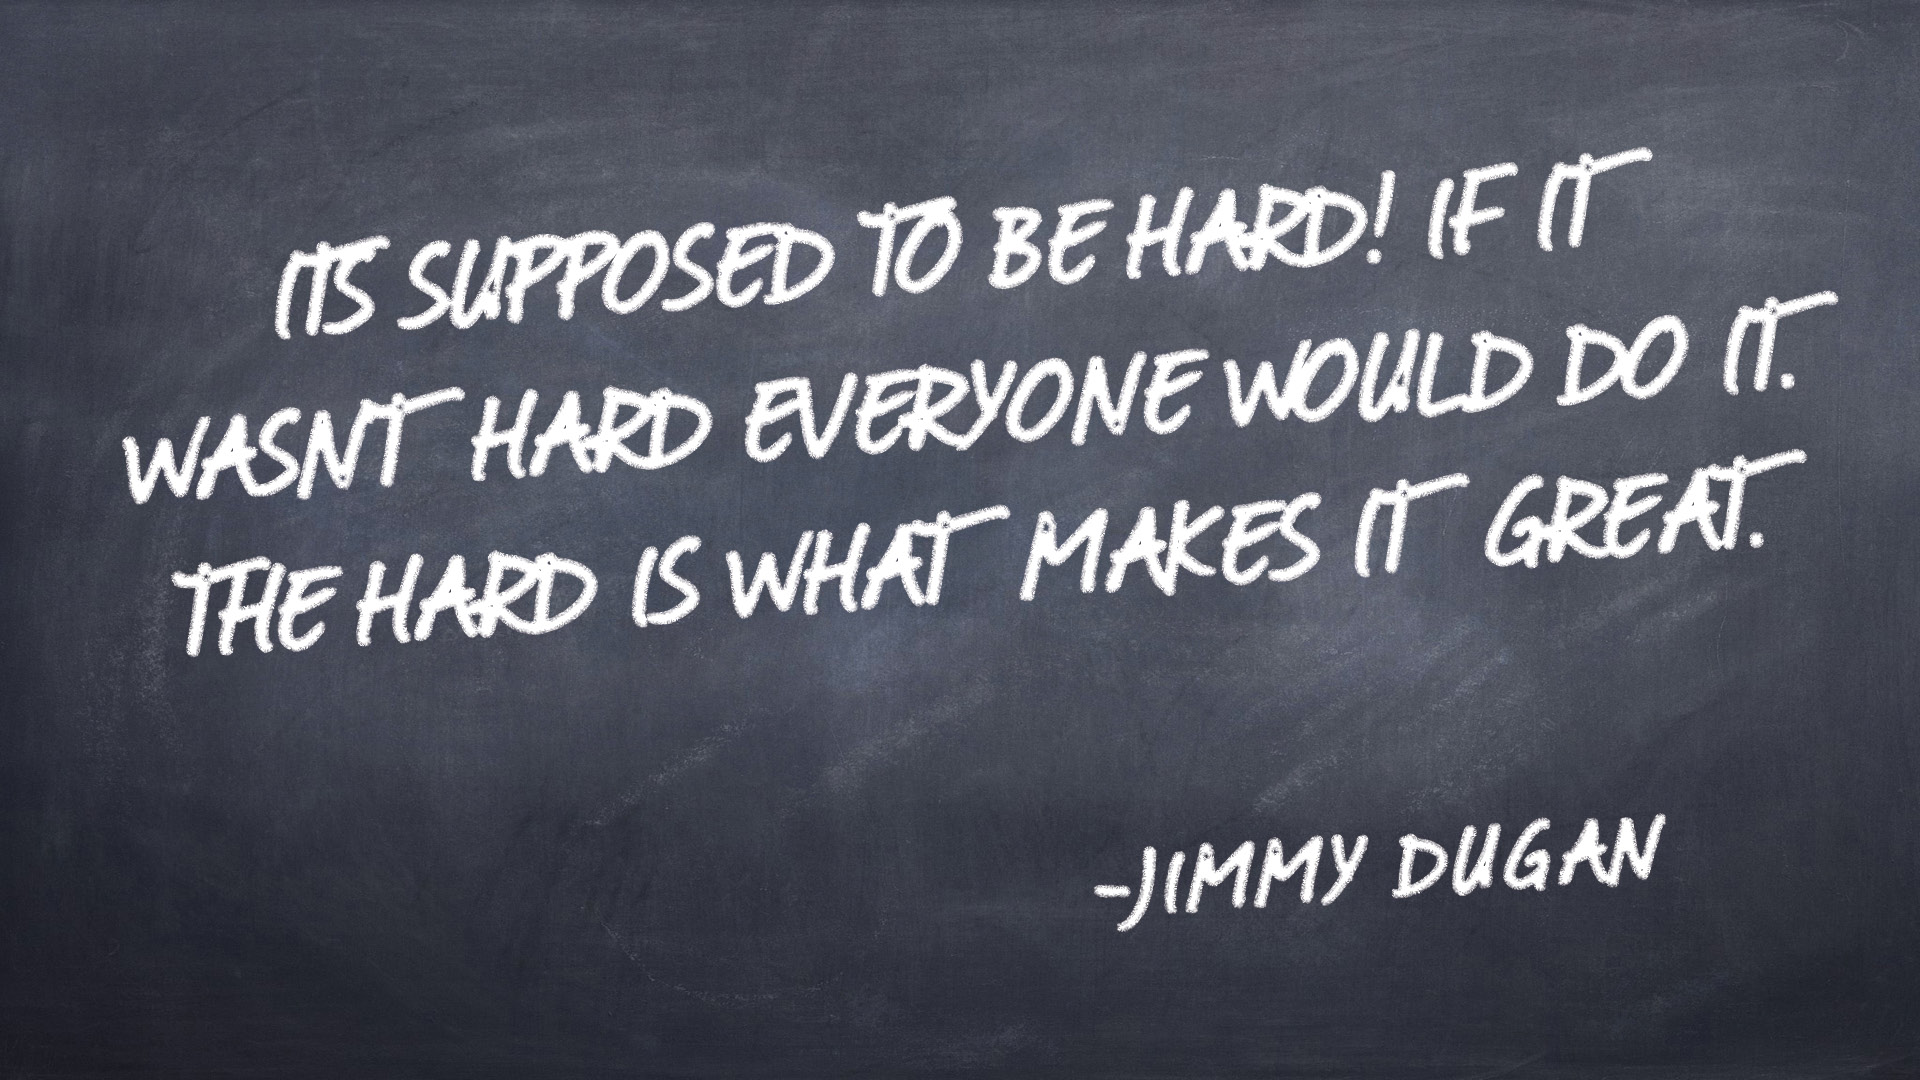 Inspirational Quotes for Desktop Wallpaper - Jimmy Dugan.